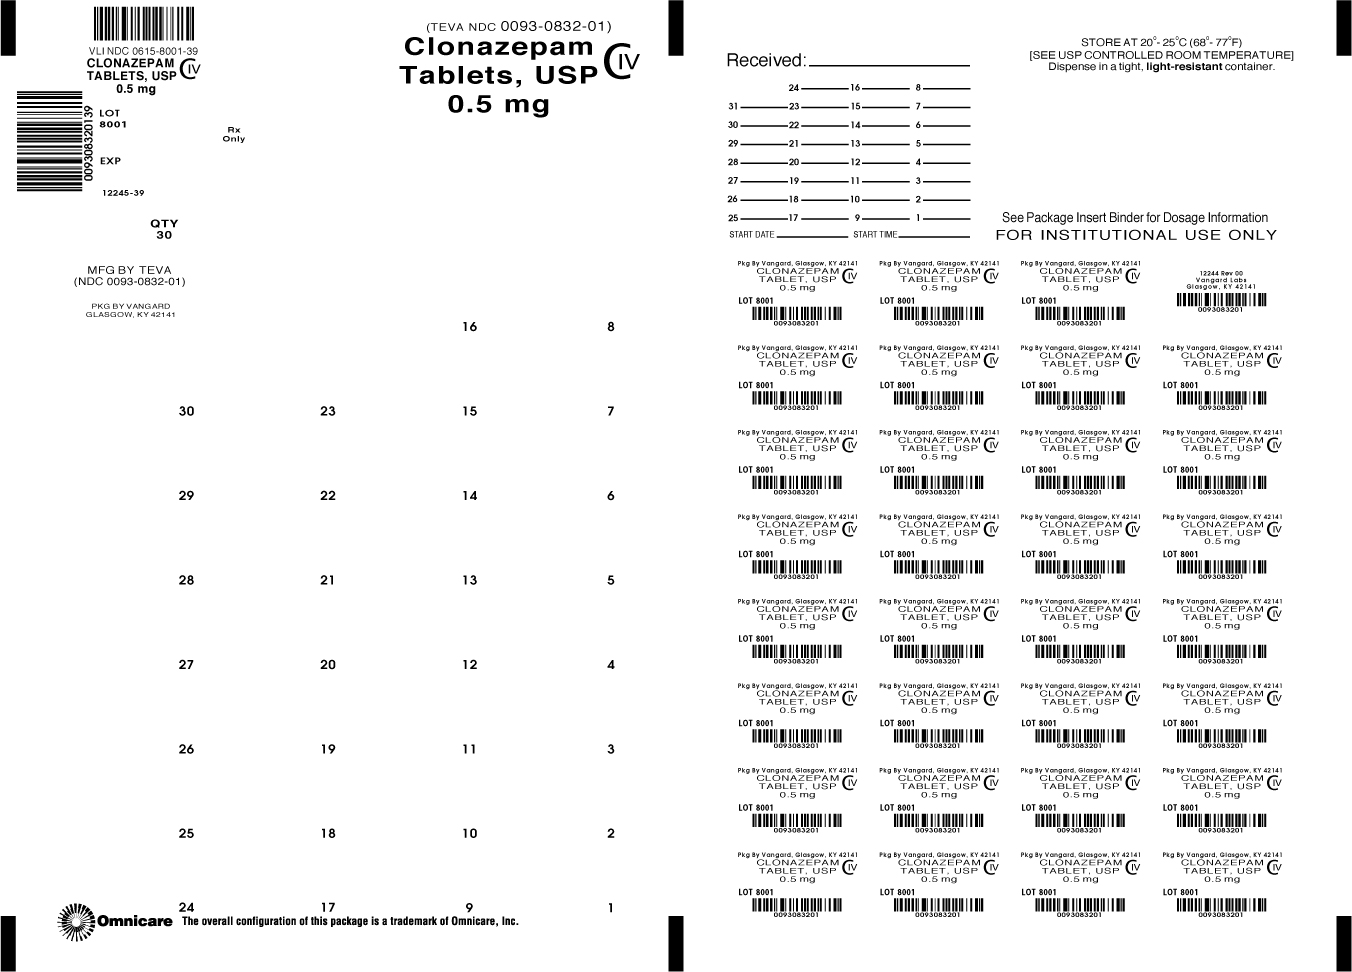 Clonazepam Tablets, USP 0.5mg blistercard image